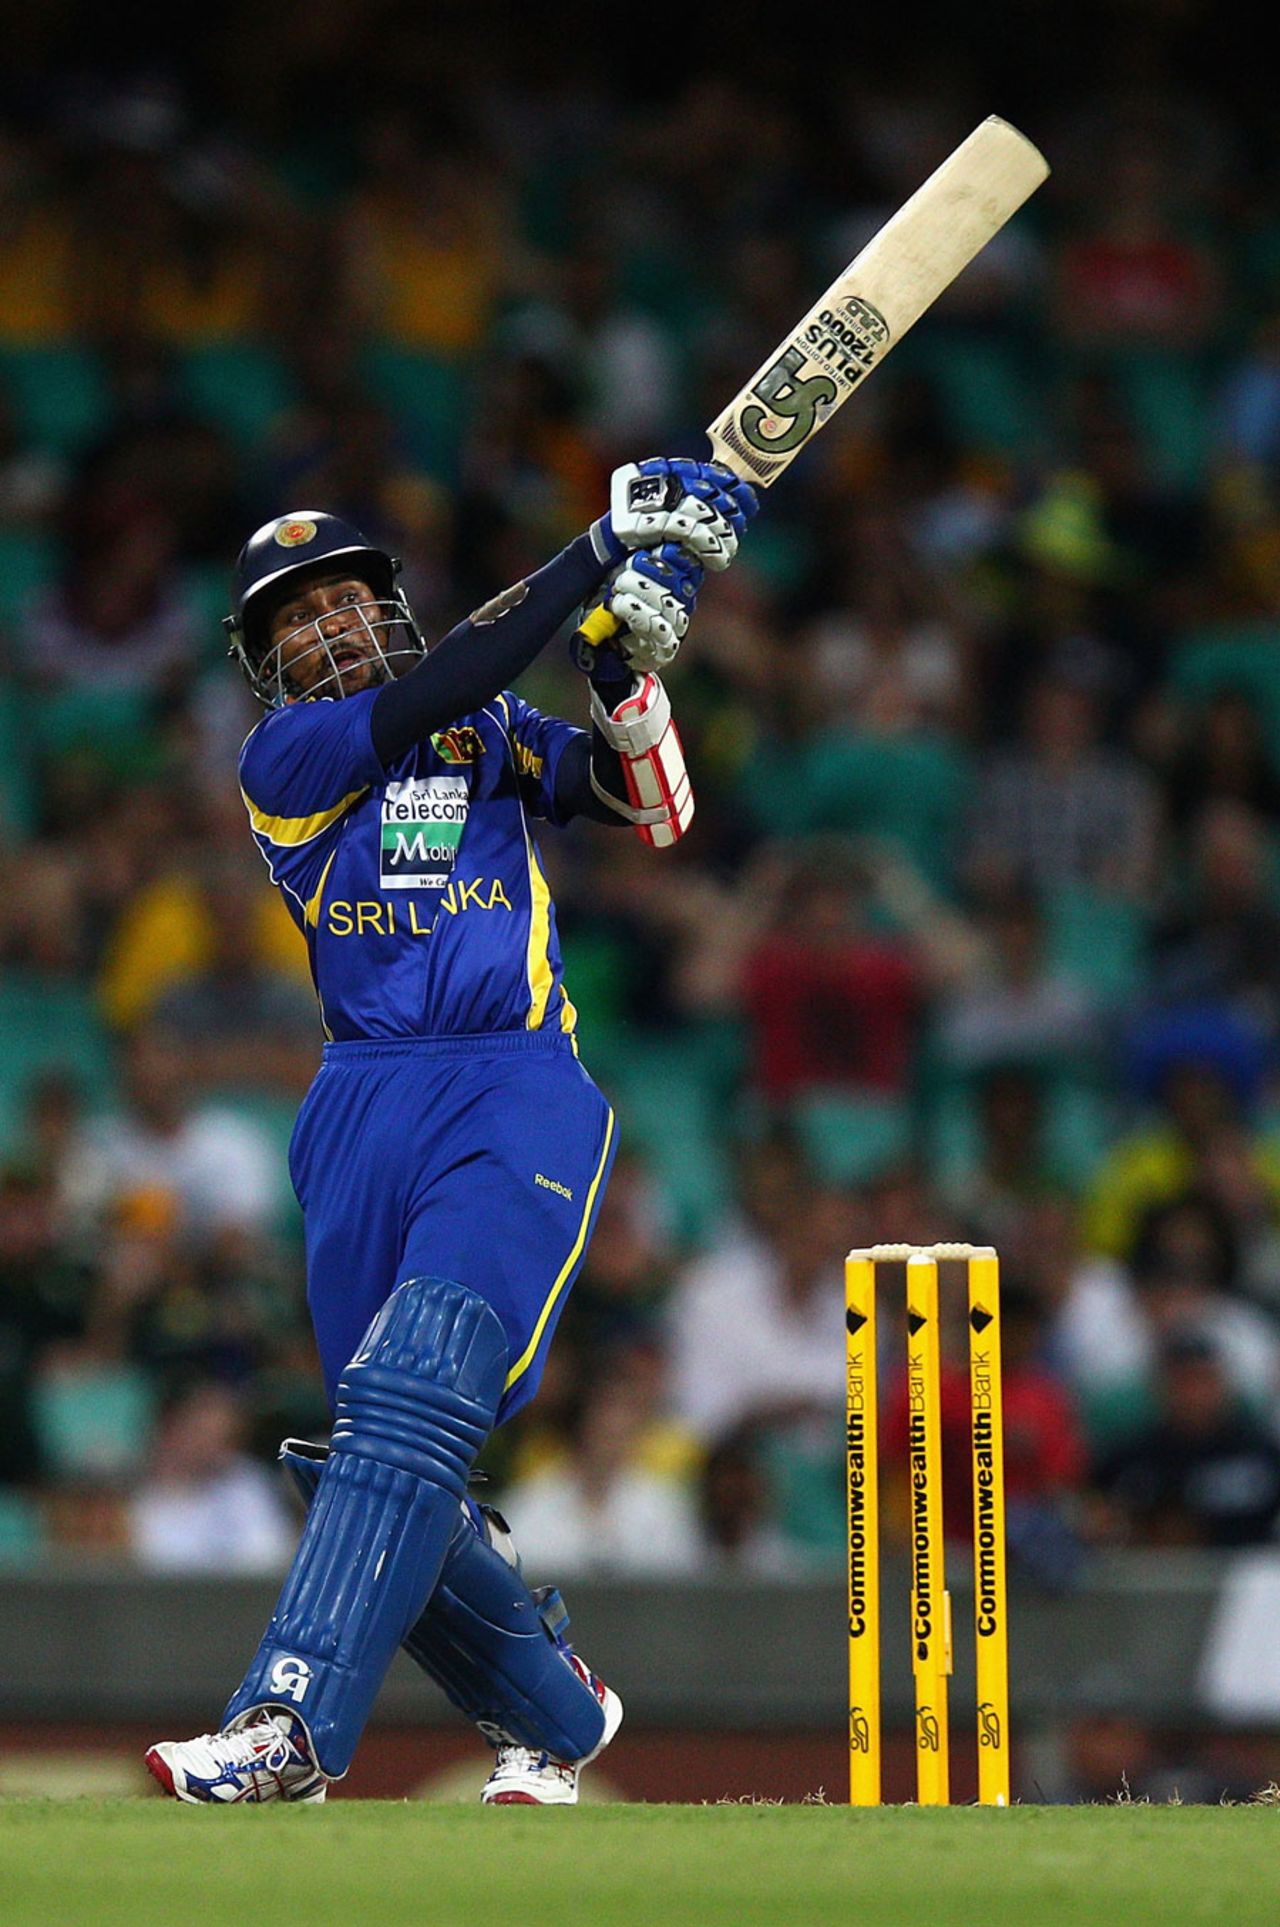 Tillakaratne Dilshan hits out, Australia v Sri Lanka, CB Series, Sydney, February 17, 2012